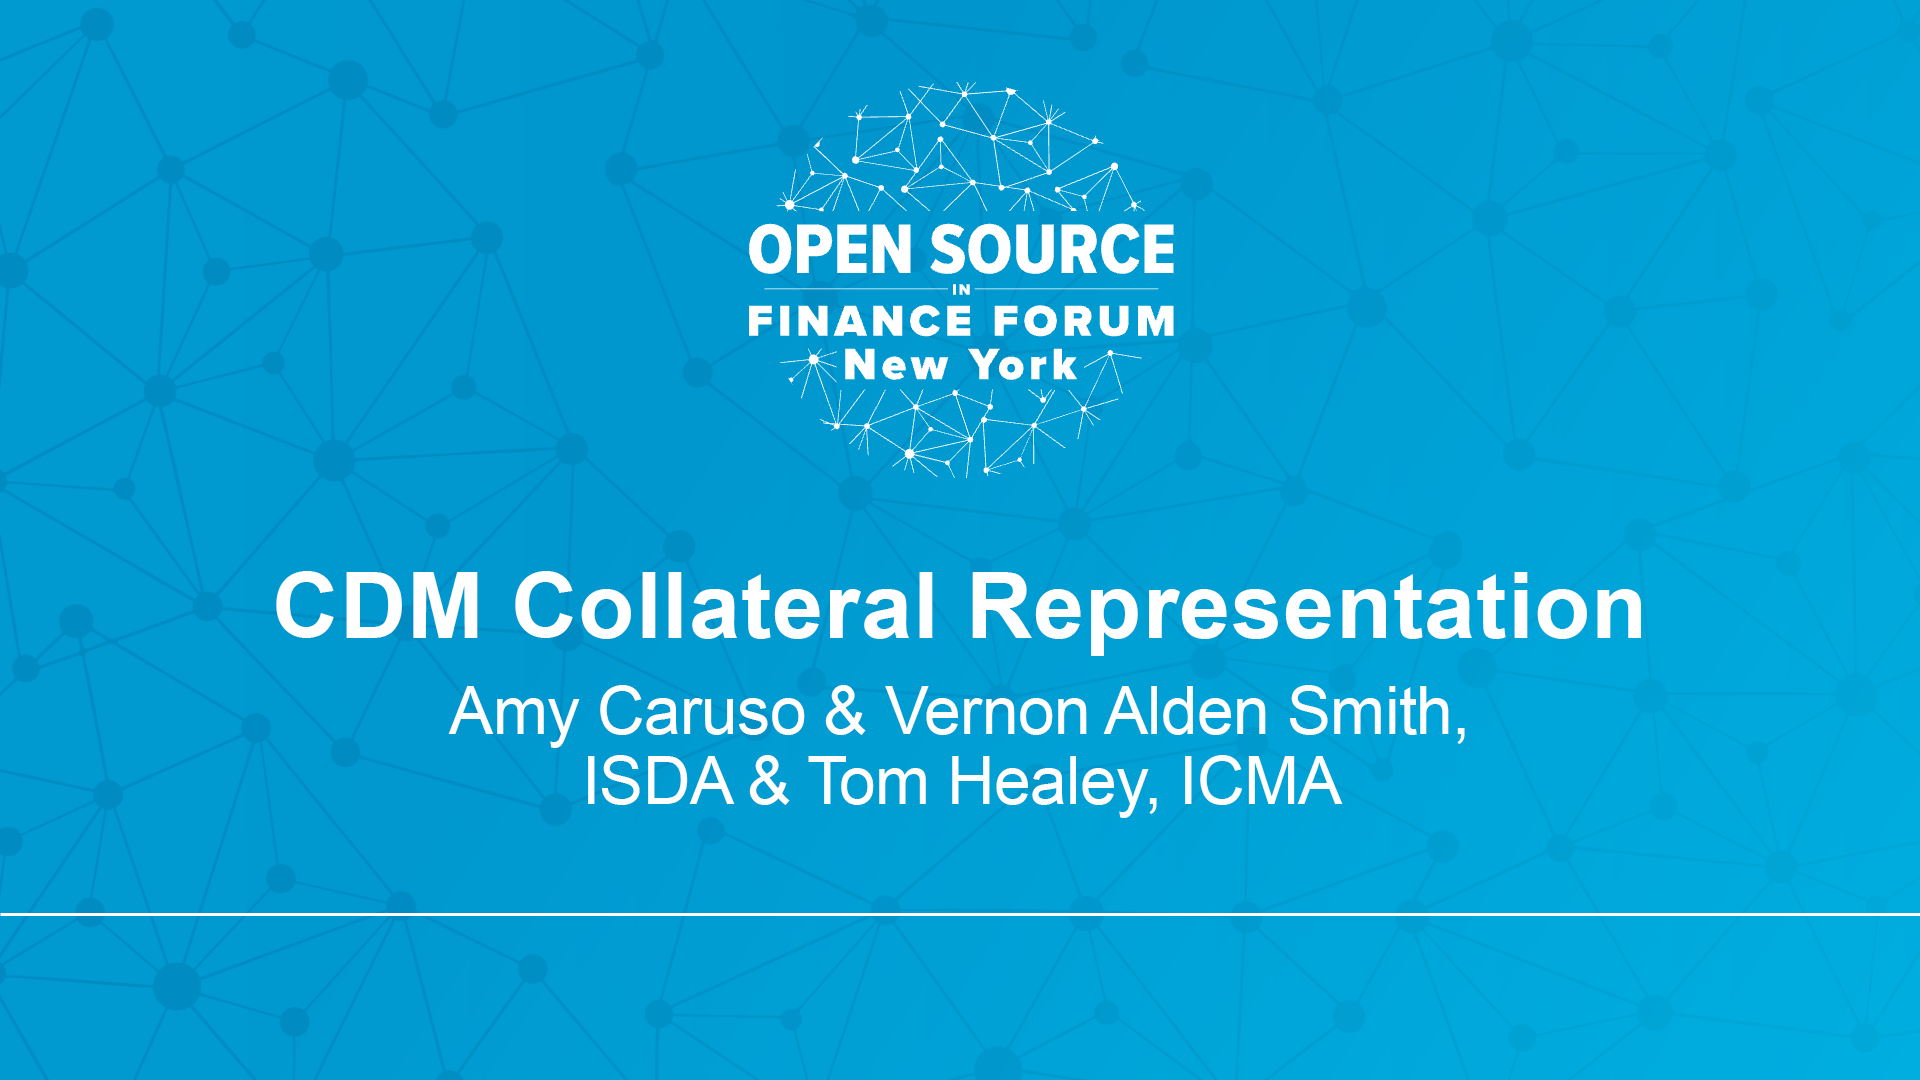 CDM Collateral Representation – Amy Caruso & Vernon Alden Smith, ISDA & Tom Healey, ICMA